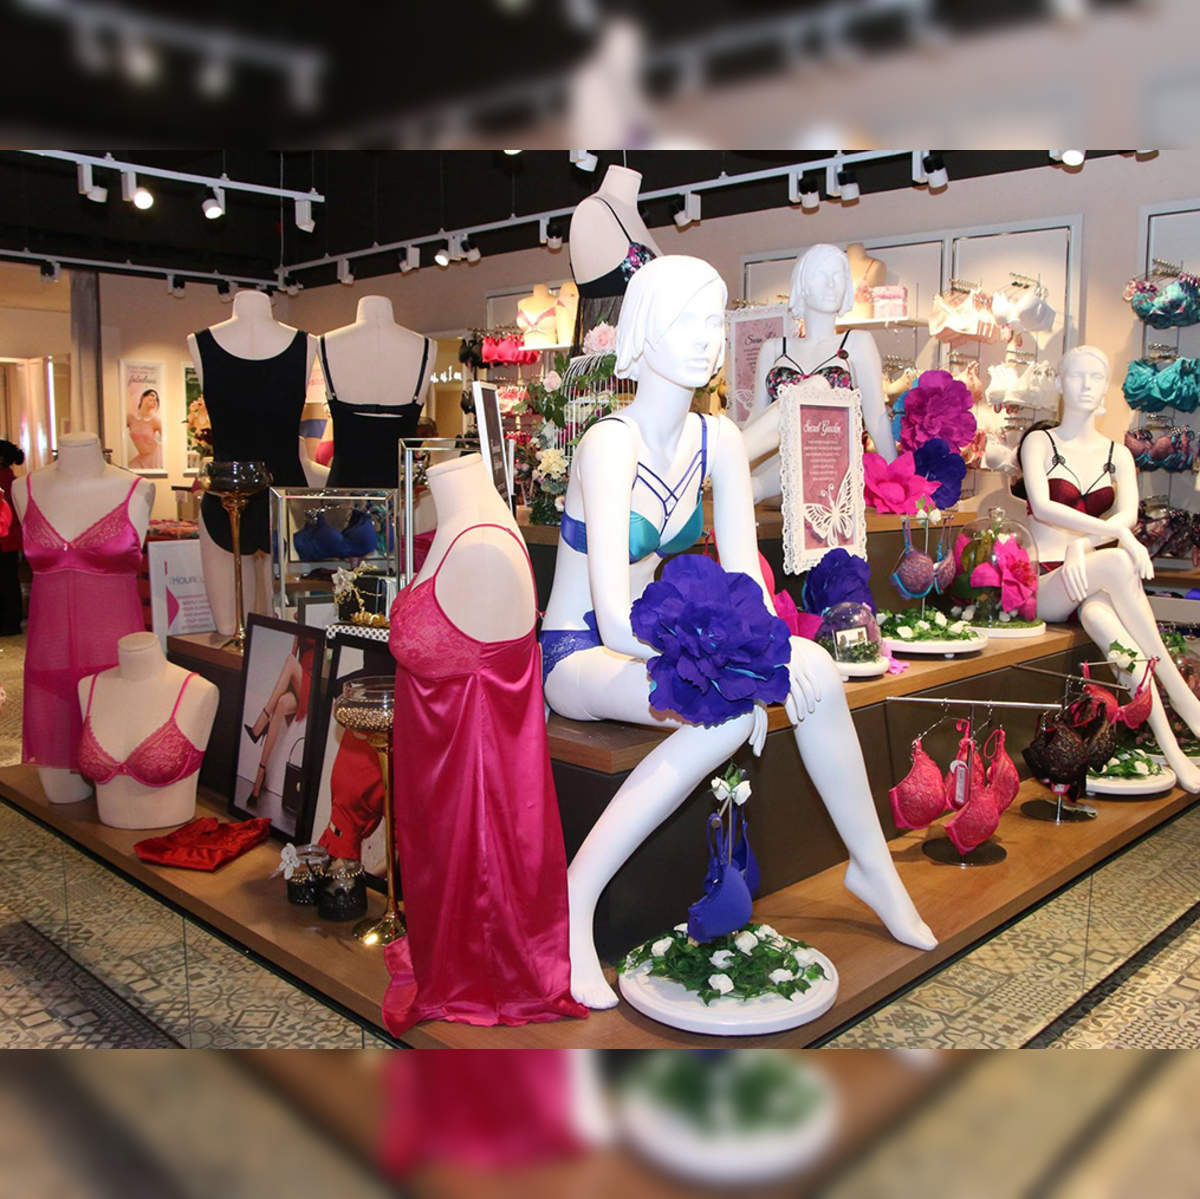 Enamor: As Indian lingerie brands struggle against international